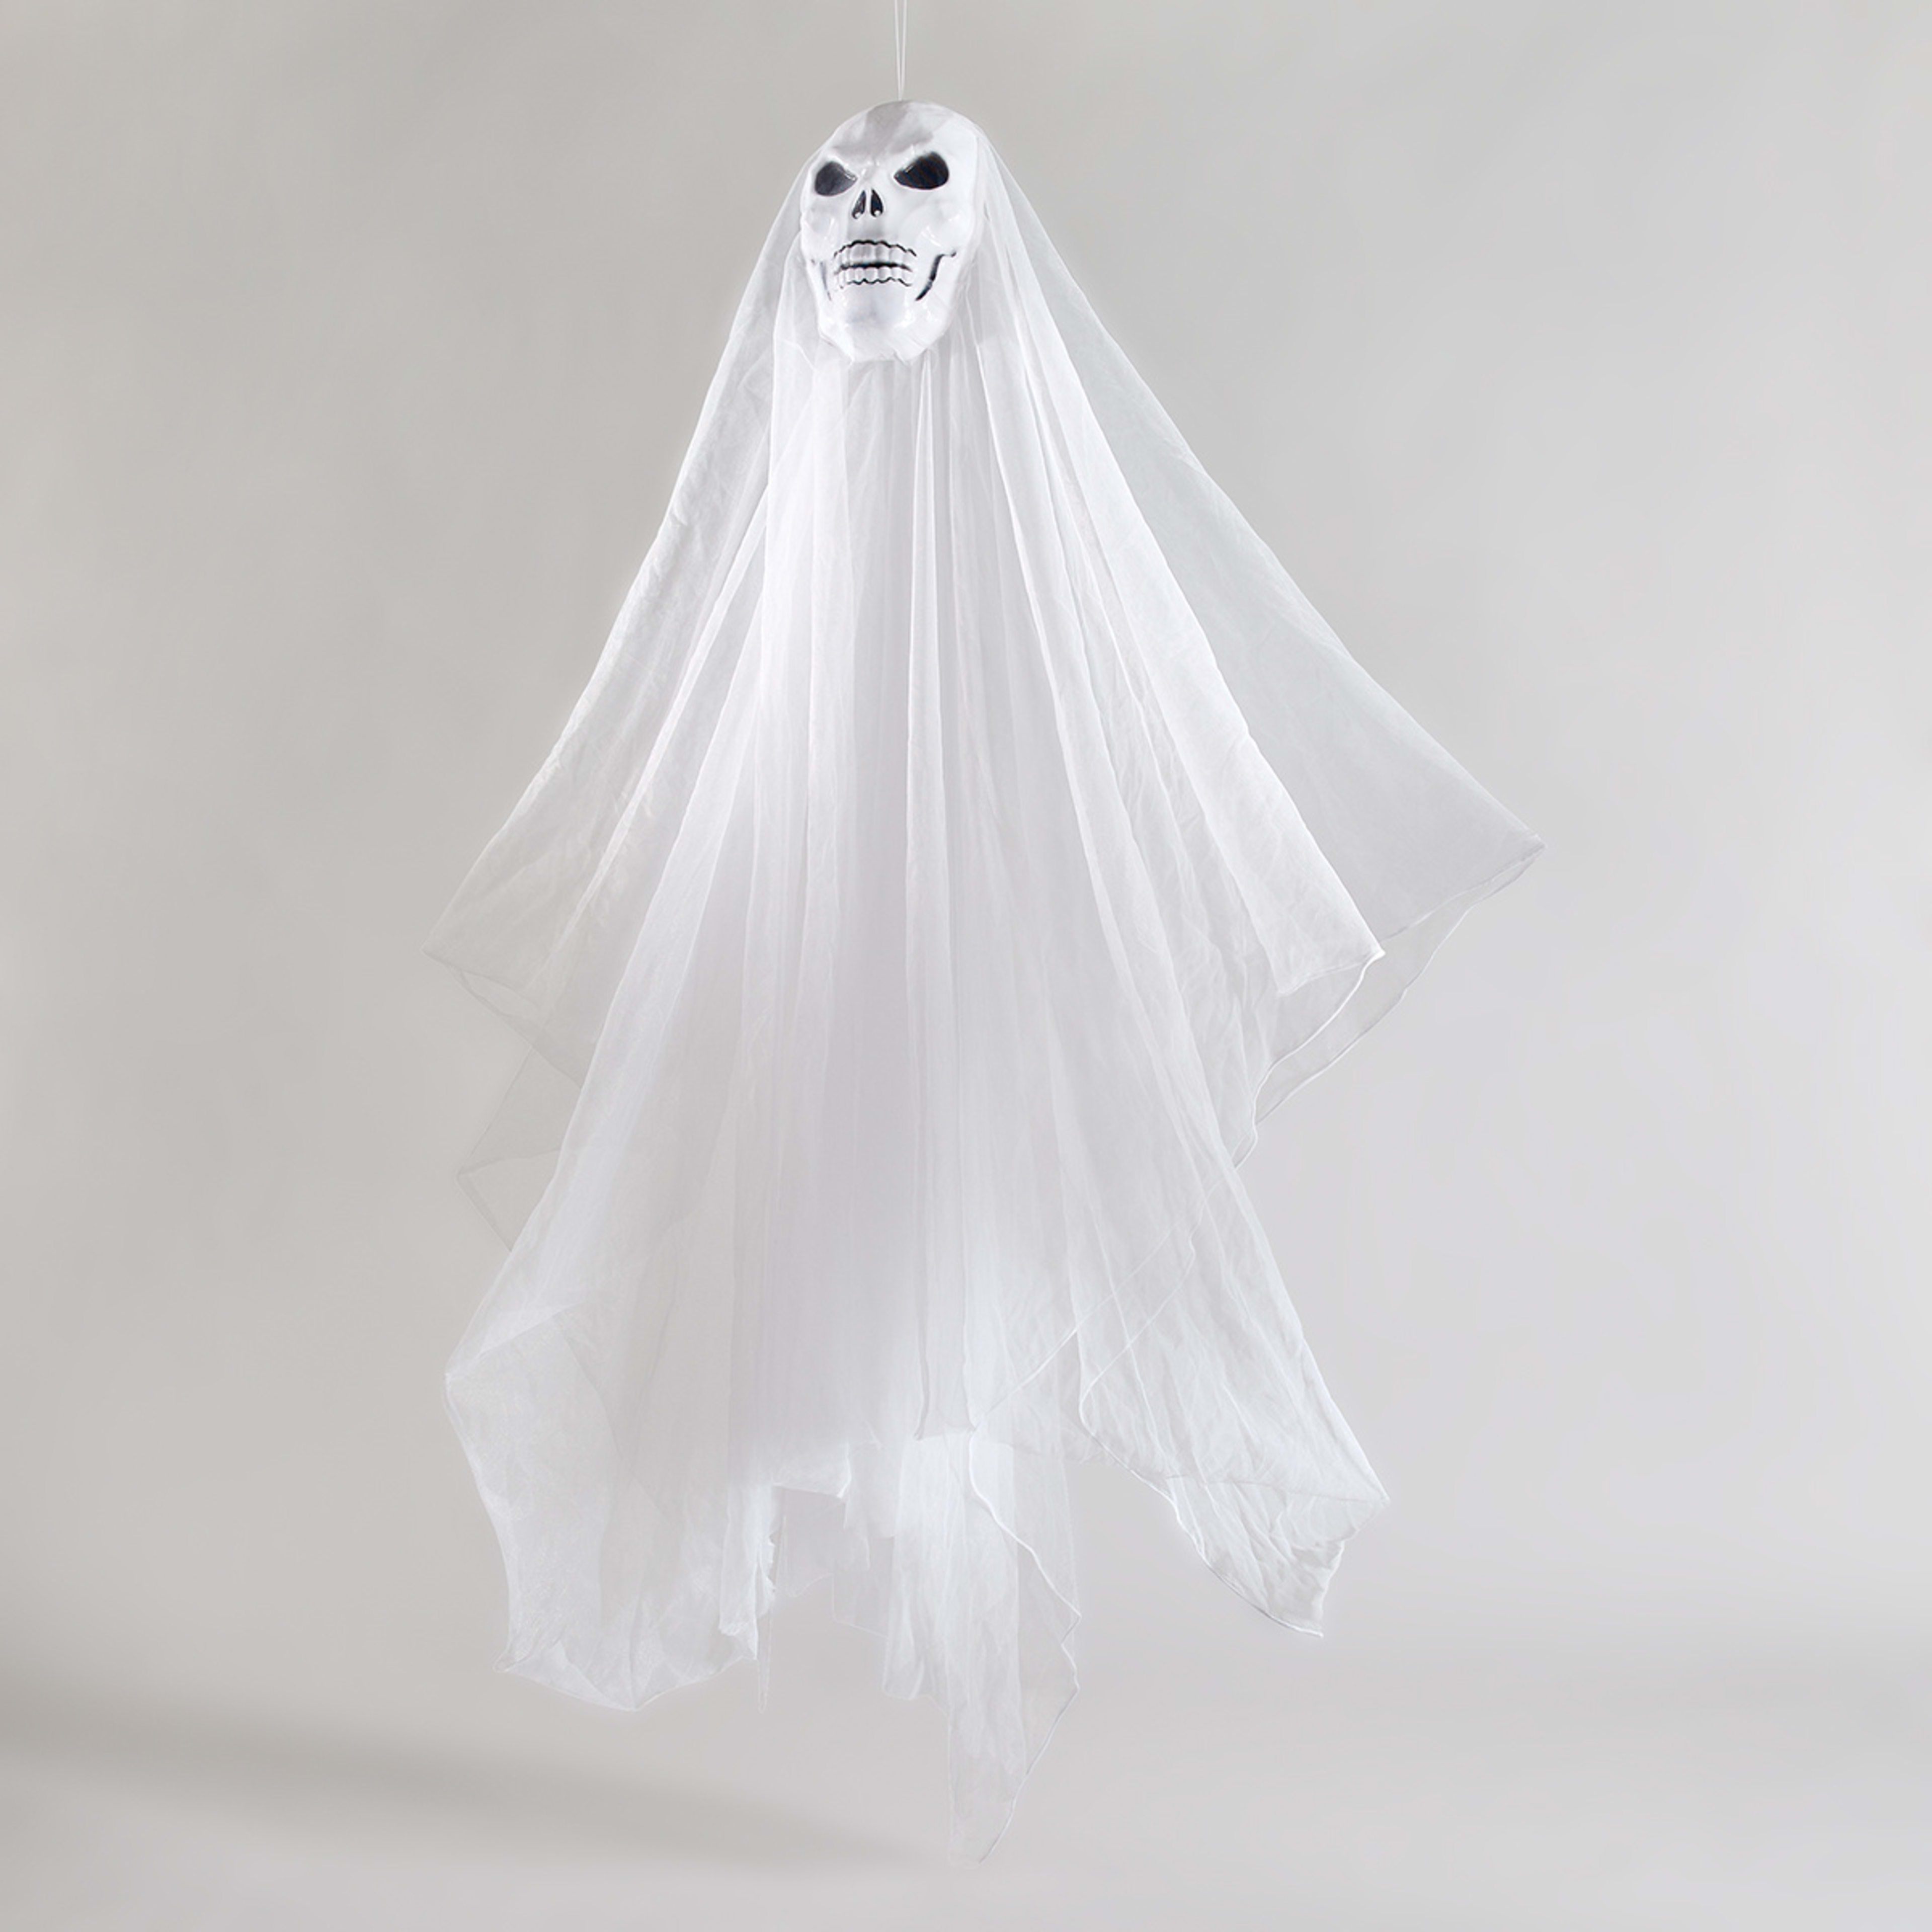 Hanging Gauze Ghost - Kmart